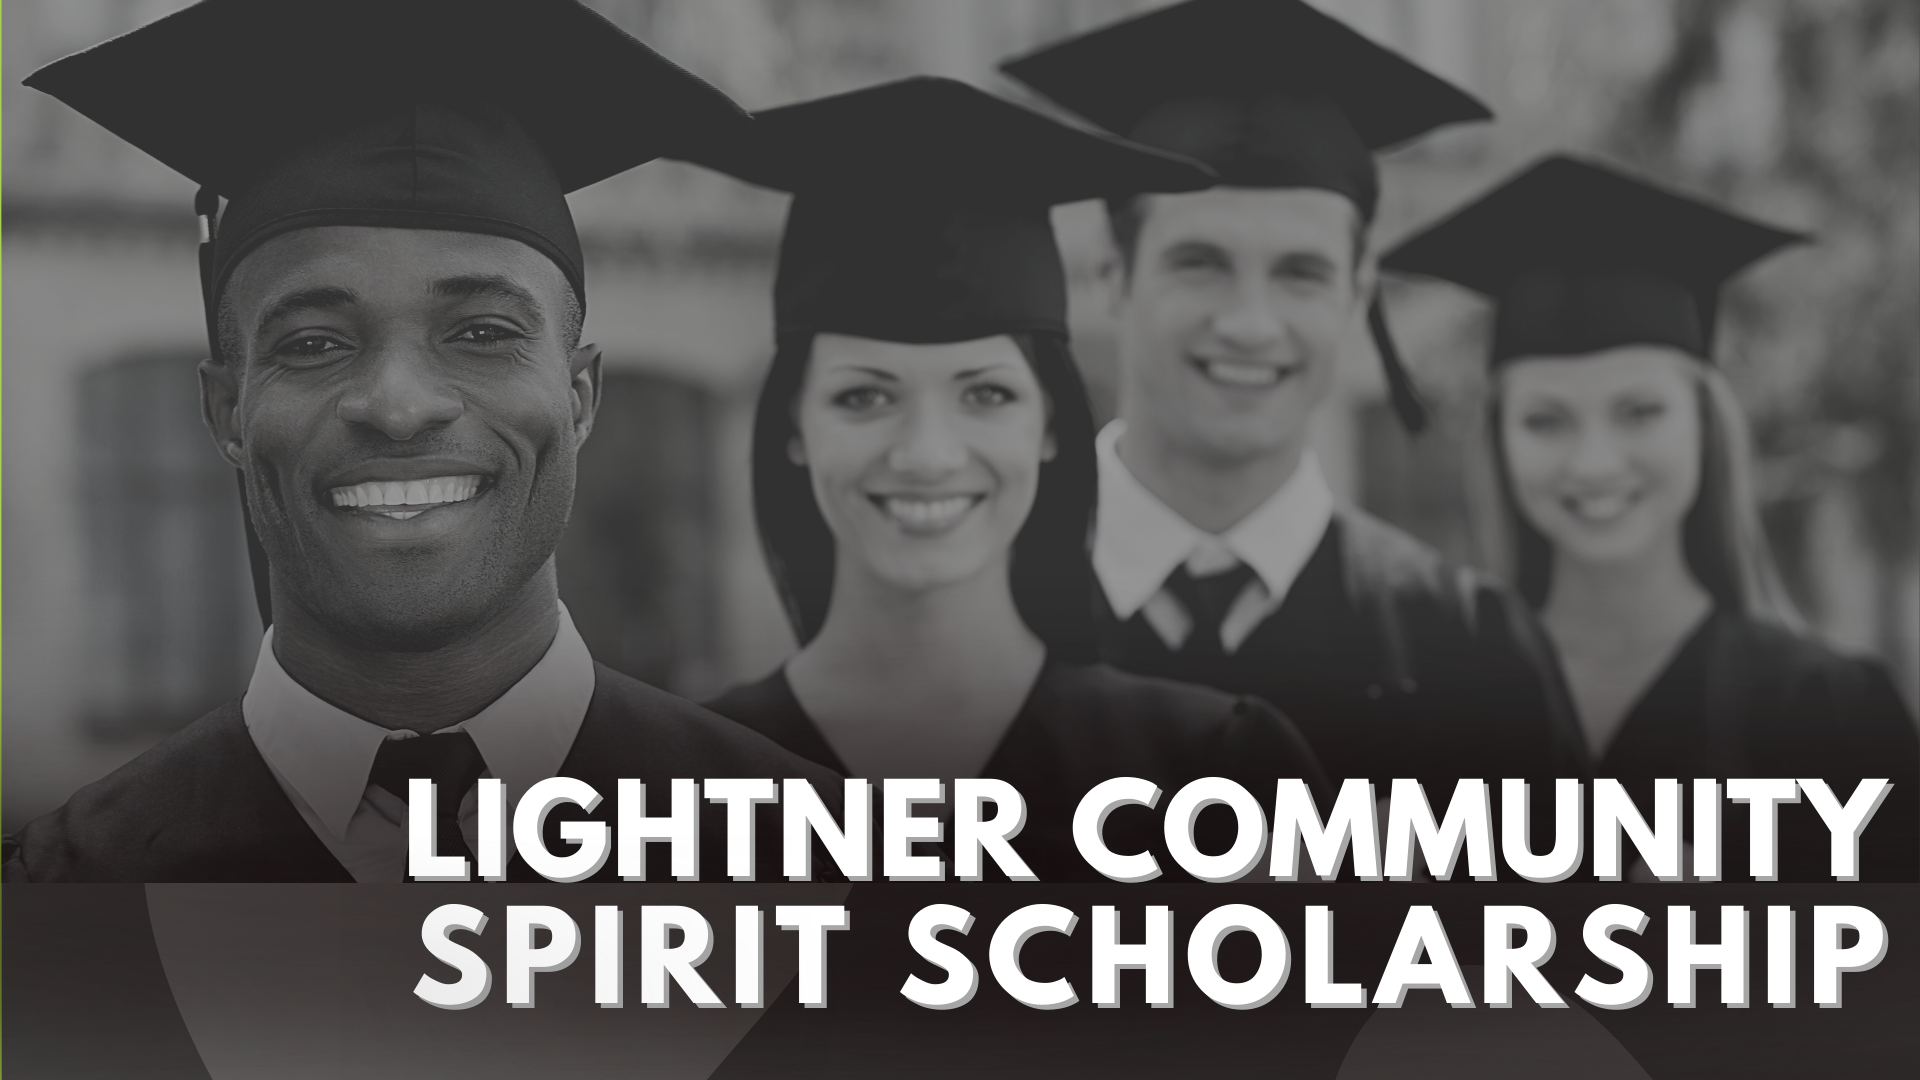 Copy of Copy of Lightner community spirit scholarship.png